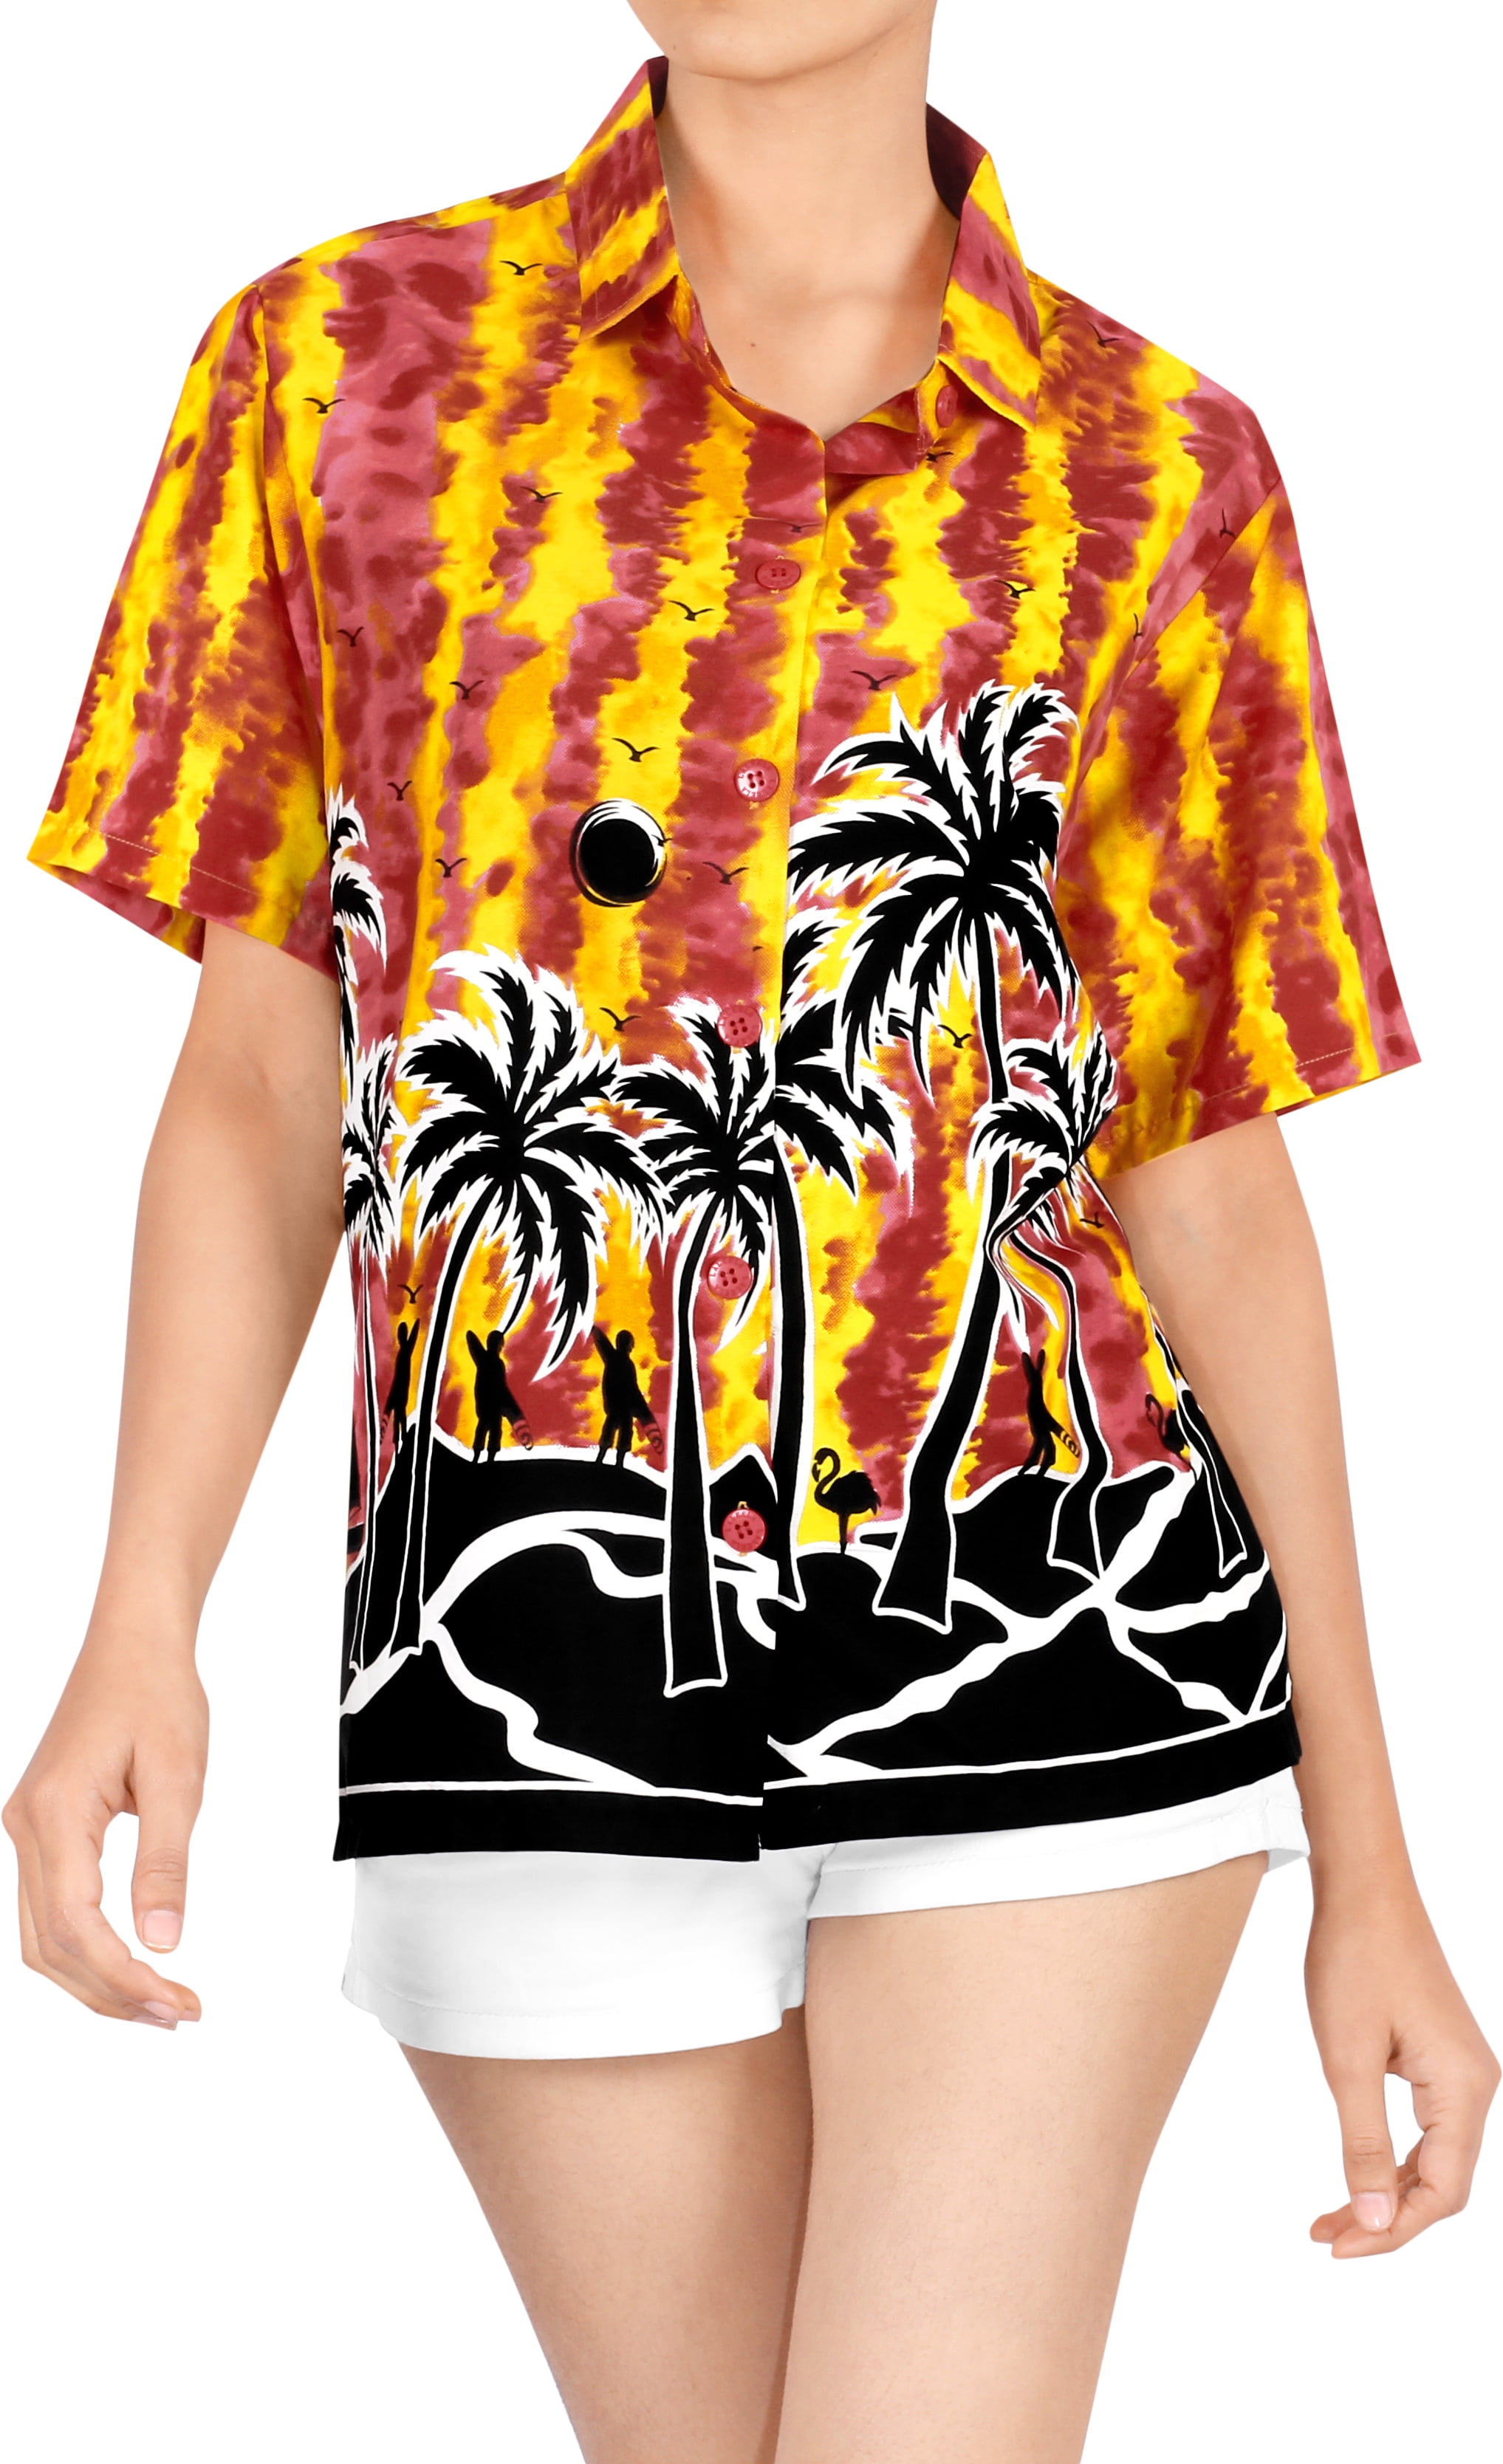 LA LEELA Women's Button Up Relaxed Hawaiian Beach Shirt Floral Print Short Sleeves Collared Summer Tops Blue_X78 Small 